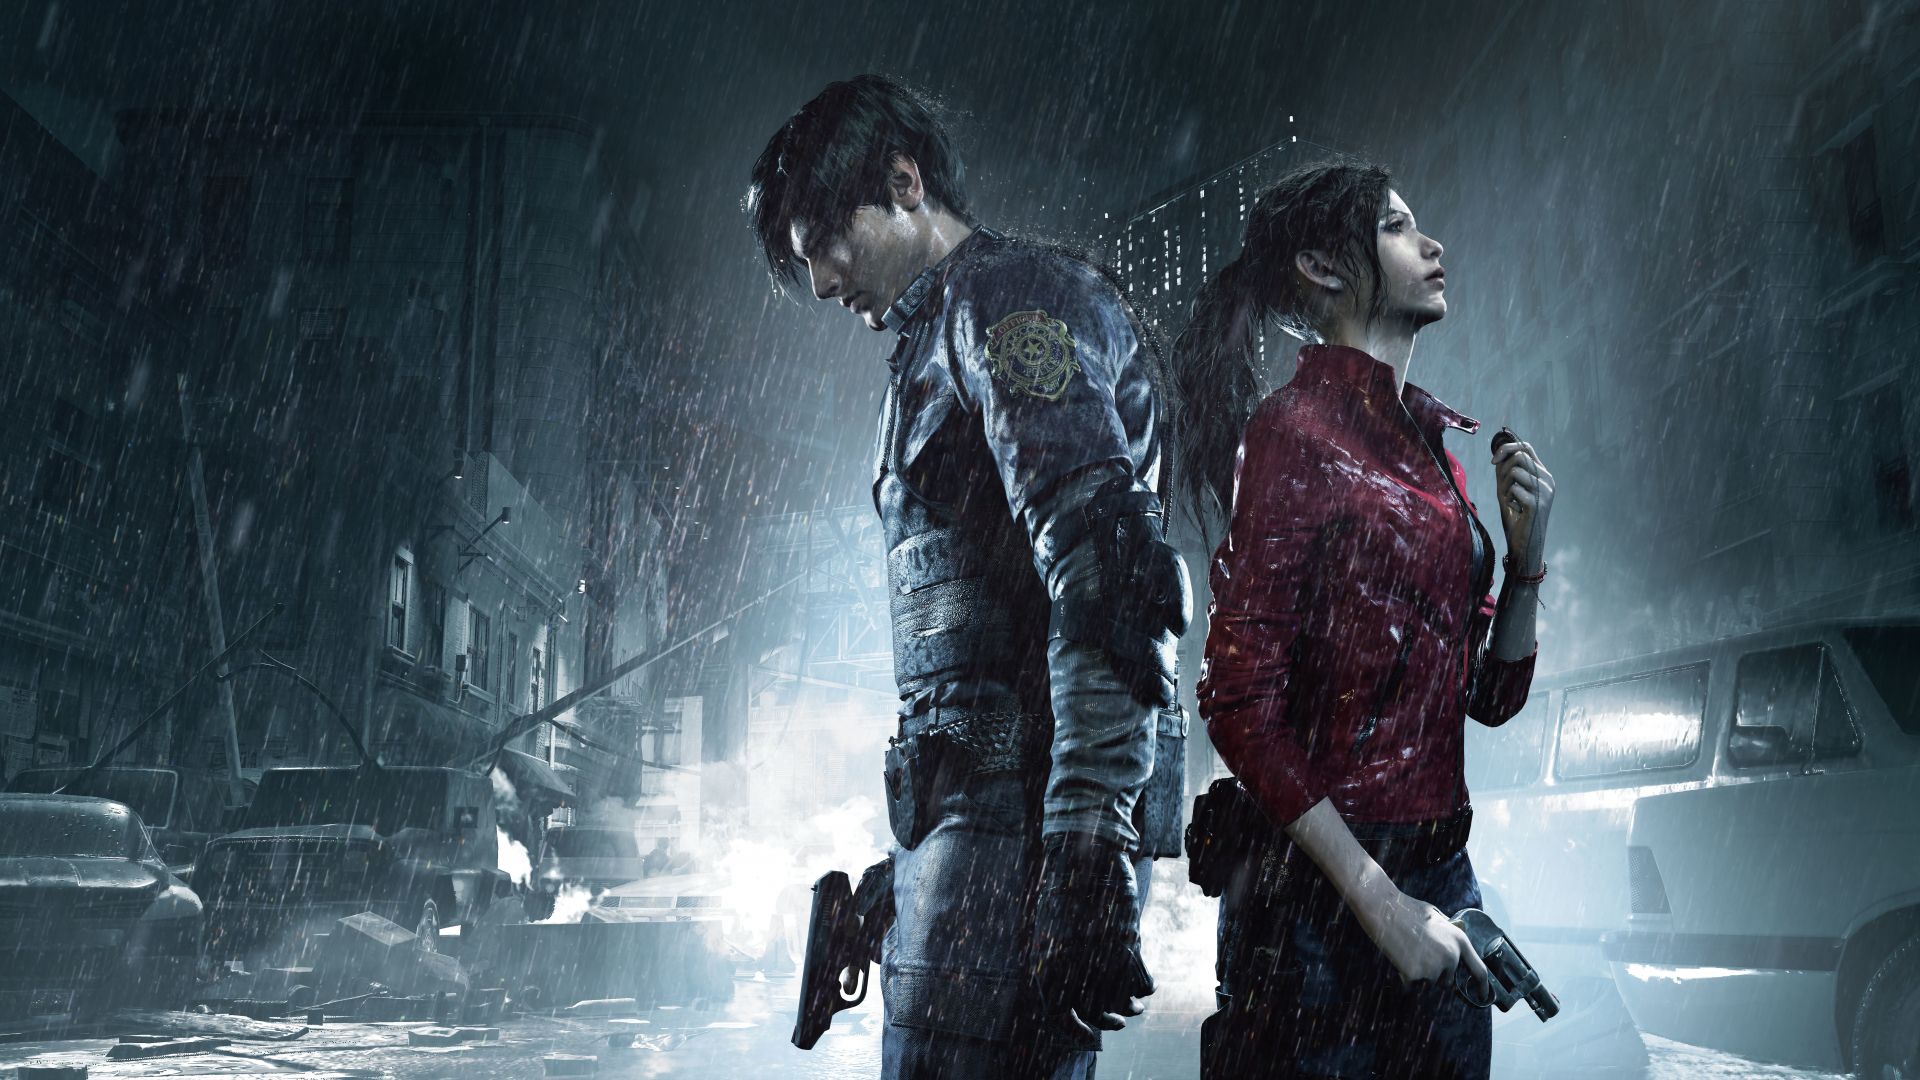 Обитель зла 2, Resident Evil 2, Gamescom 2018, poster, artwork, 10K (horizontal)